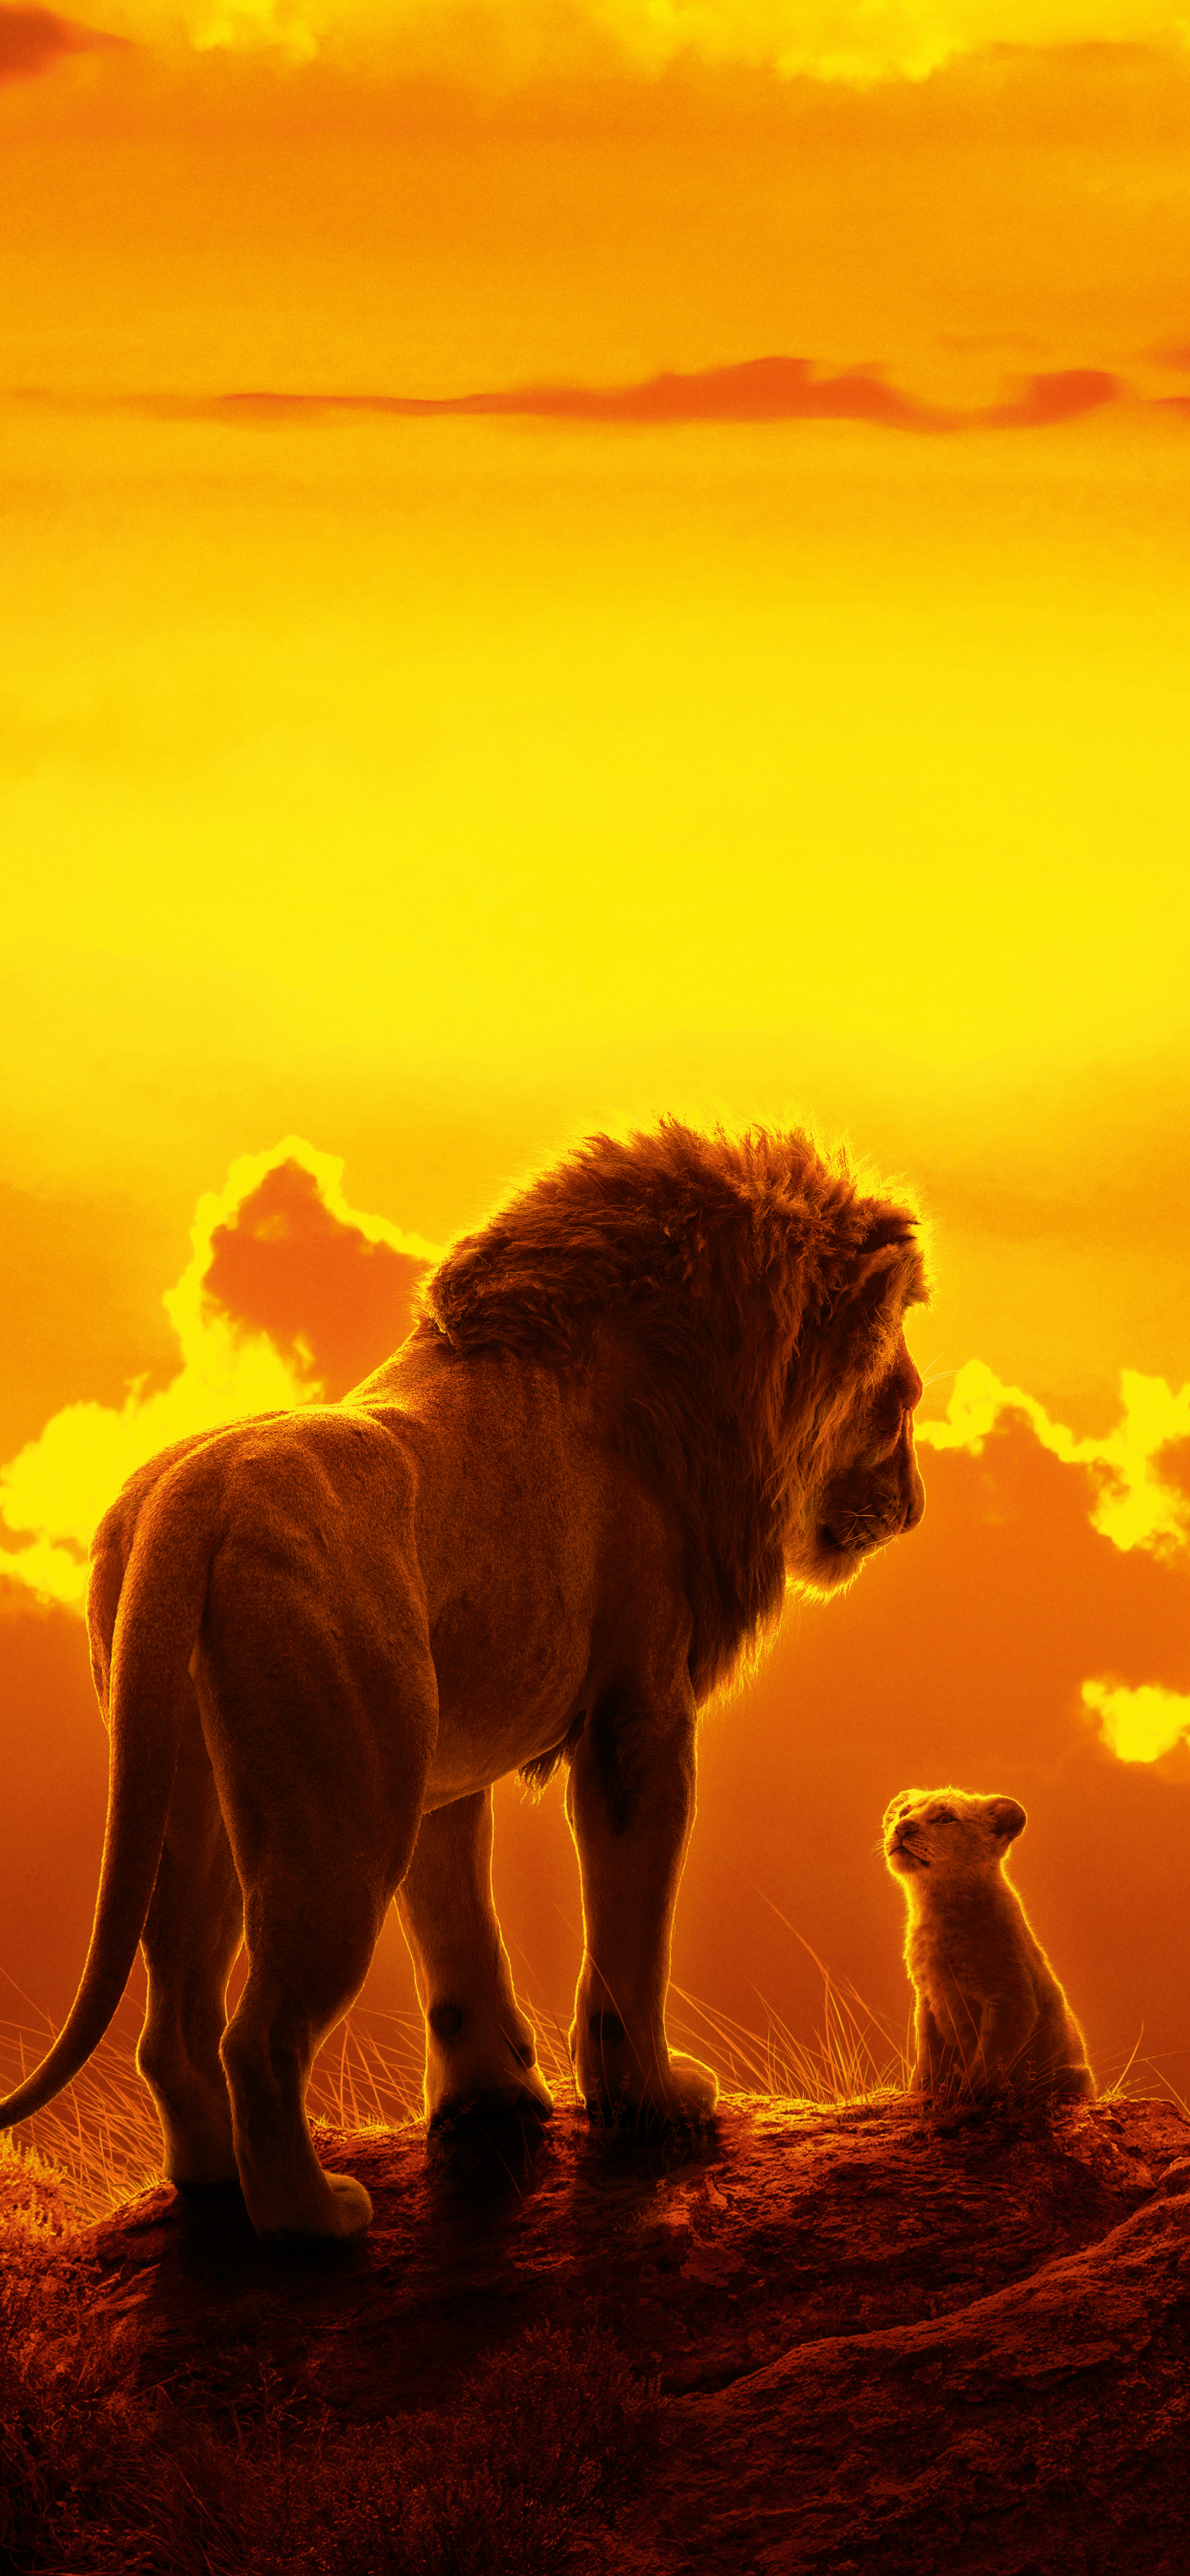 the lion king (2019), mufasa (the lion king), movie, baby animal, lion, simba